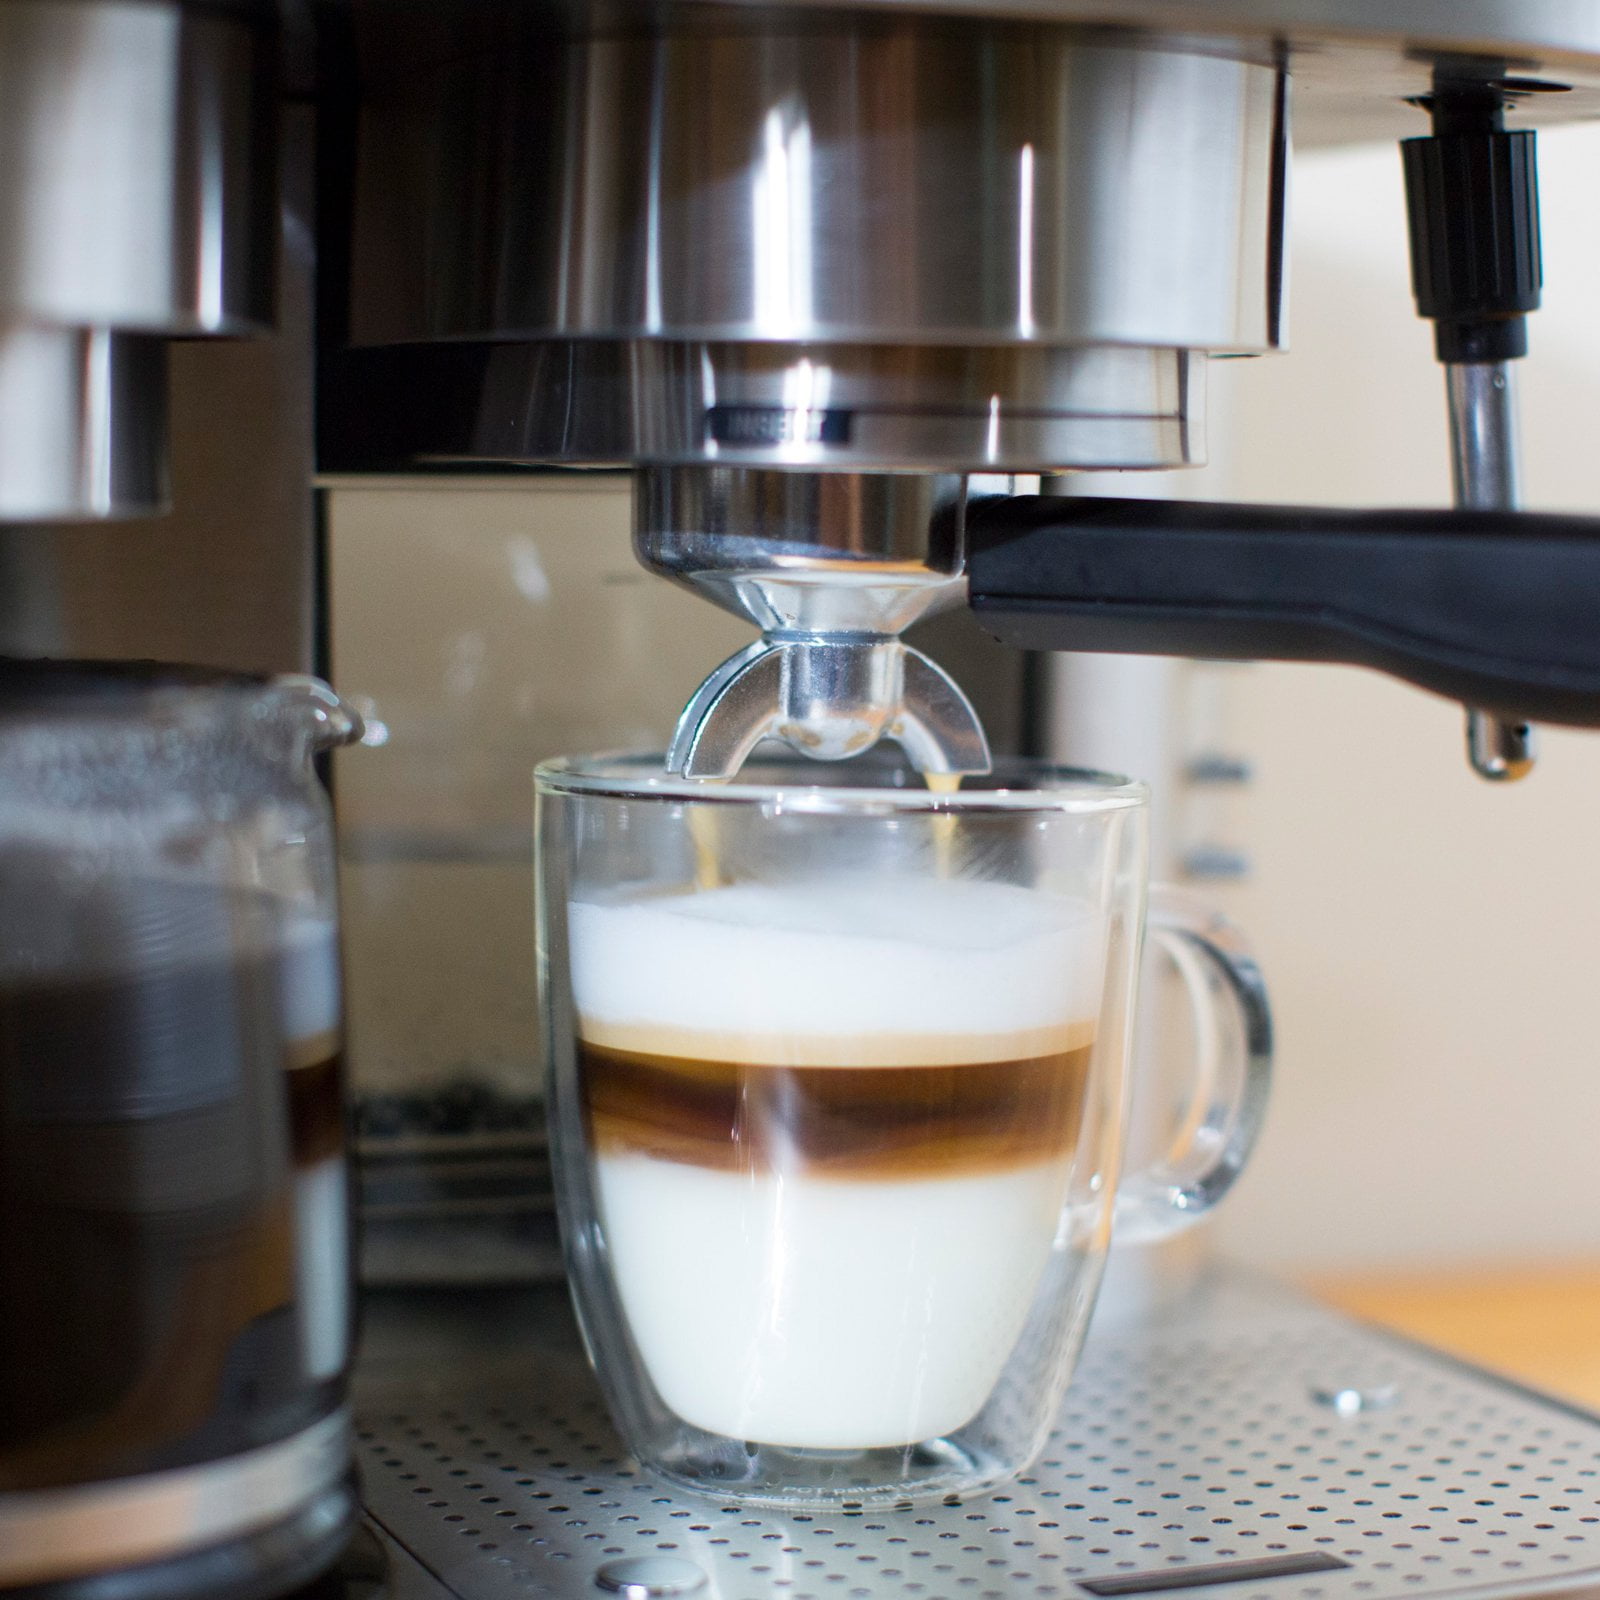 Espressione EM-1040 Combination Espresso Machine and Coffee Maker, 10 cup